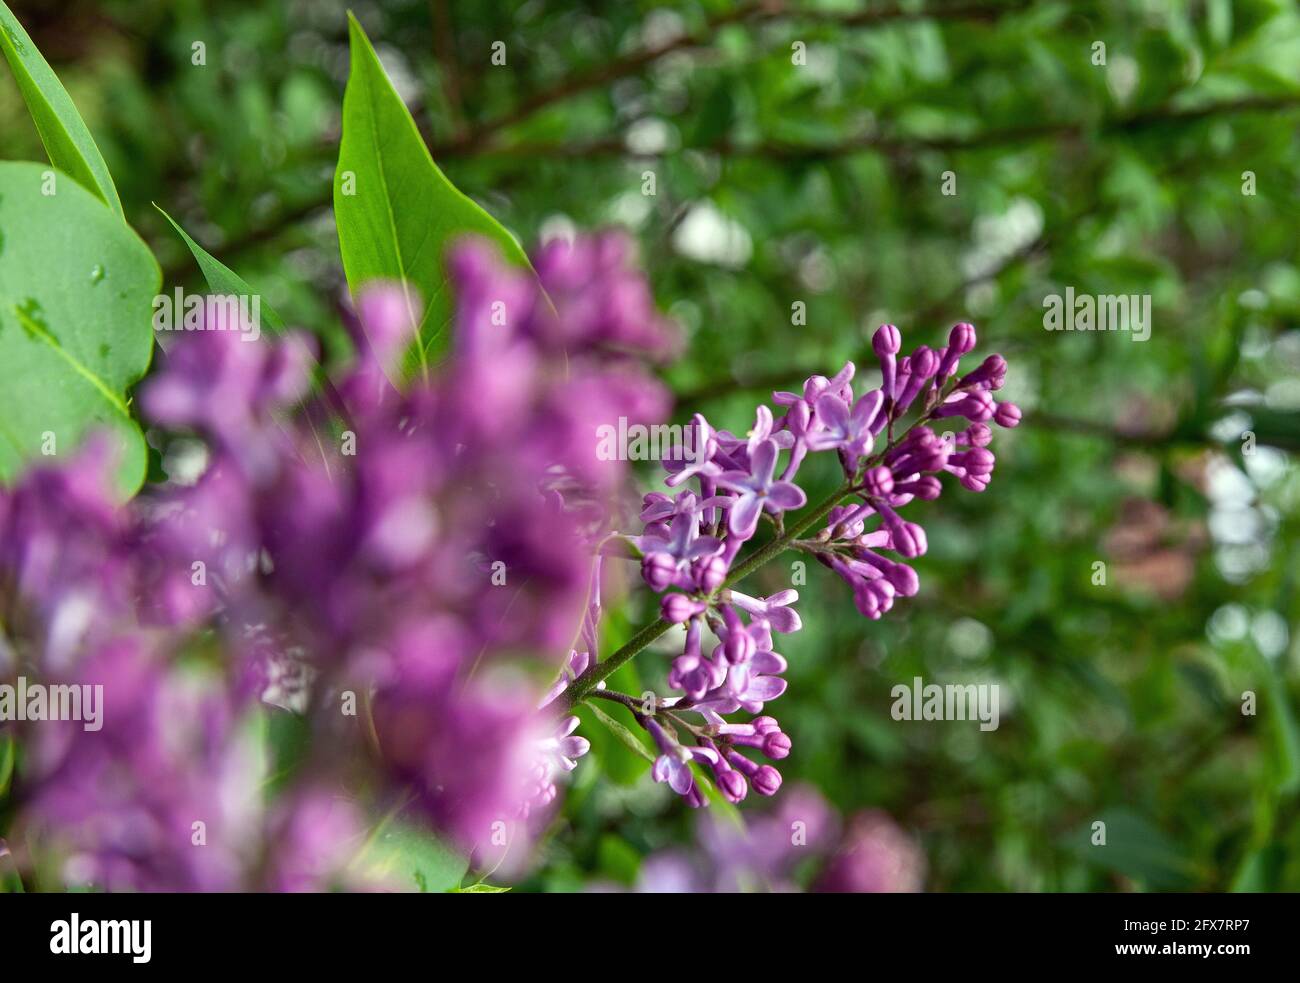 Syringa vulgaris lilac or common lilac flower on bush in garden Stock Photo